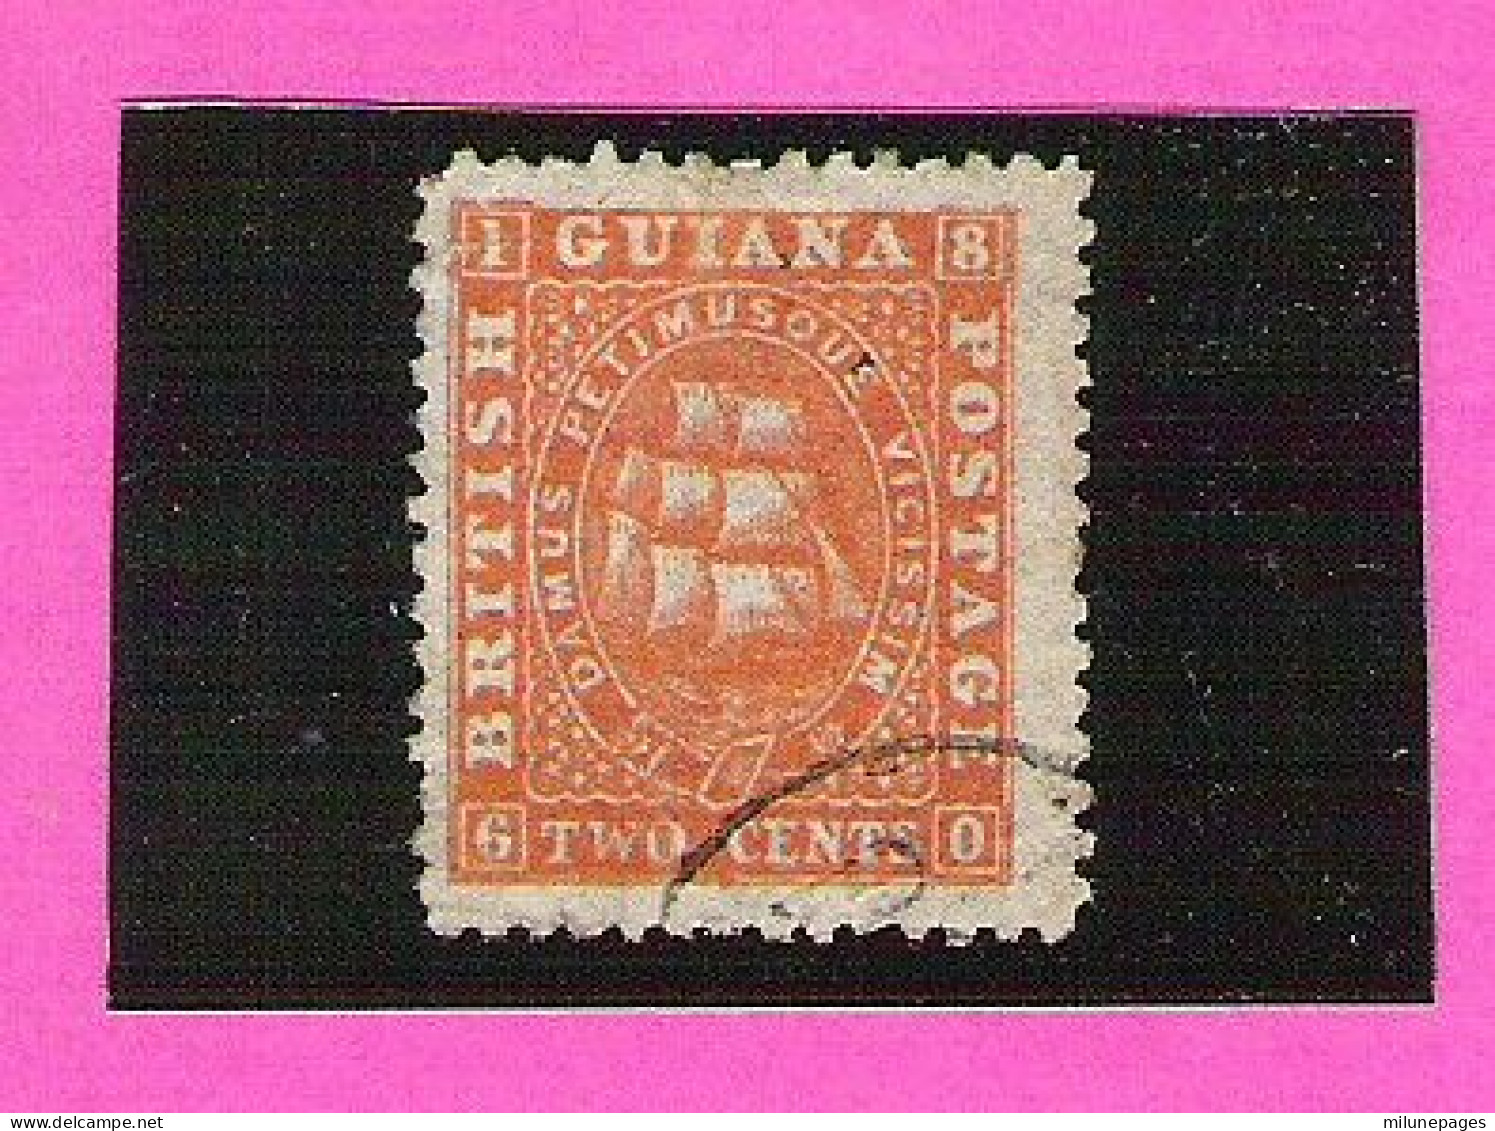 Guiana Guyane Britannique Armoiries Frégatte 2 Cent Orange Yvert 16 Canceled - Guyane Britannique (...-1966)